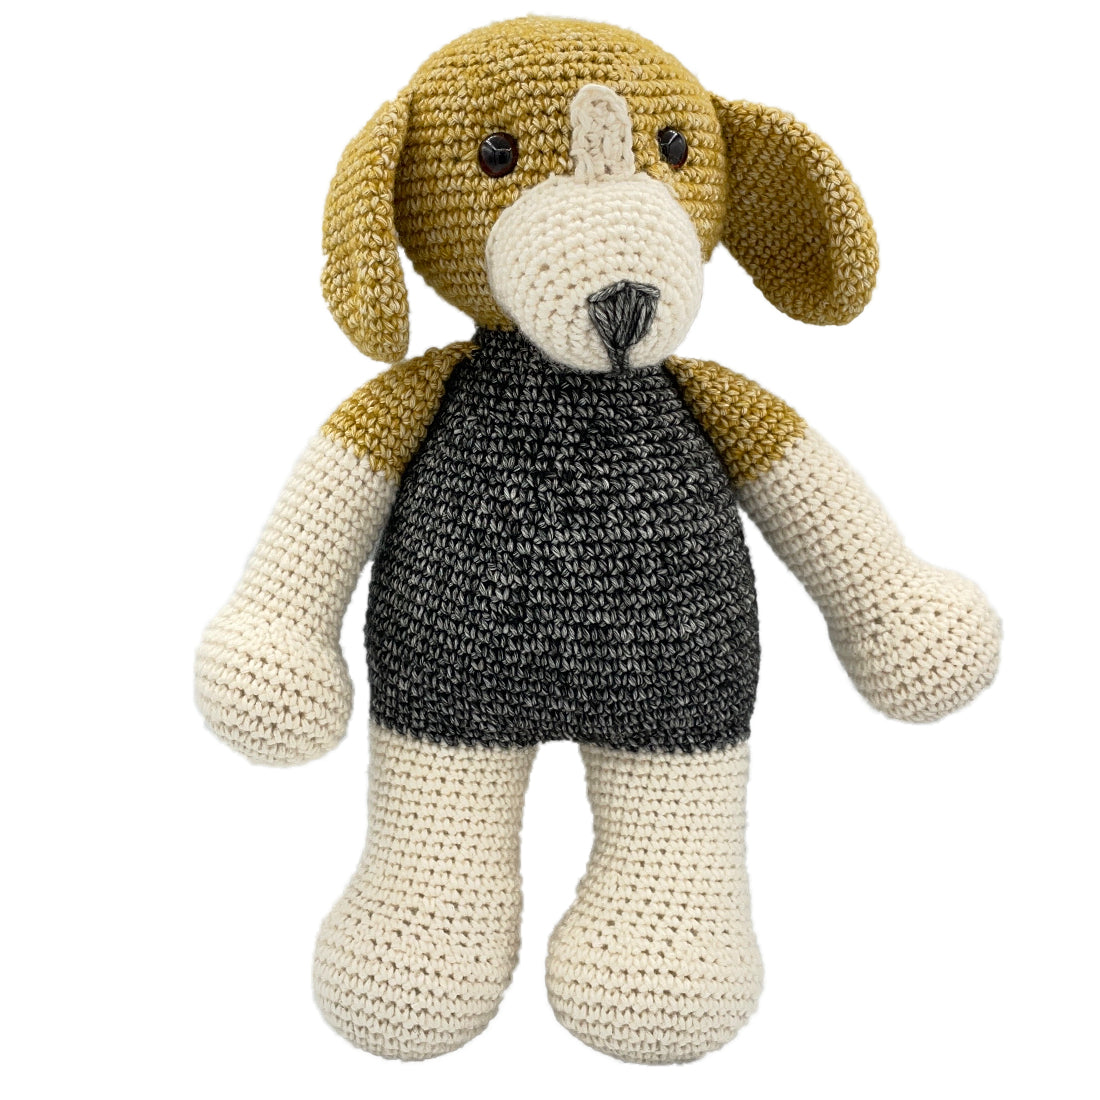 Amigurumi Crochet Pattern Dog Didi